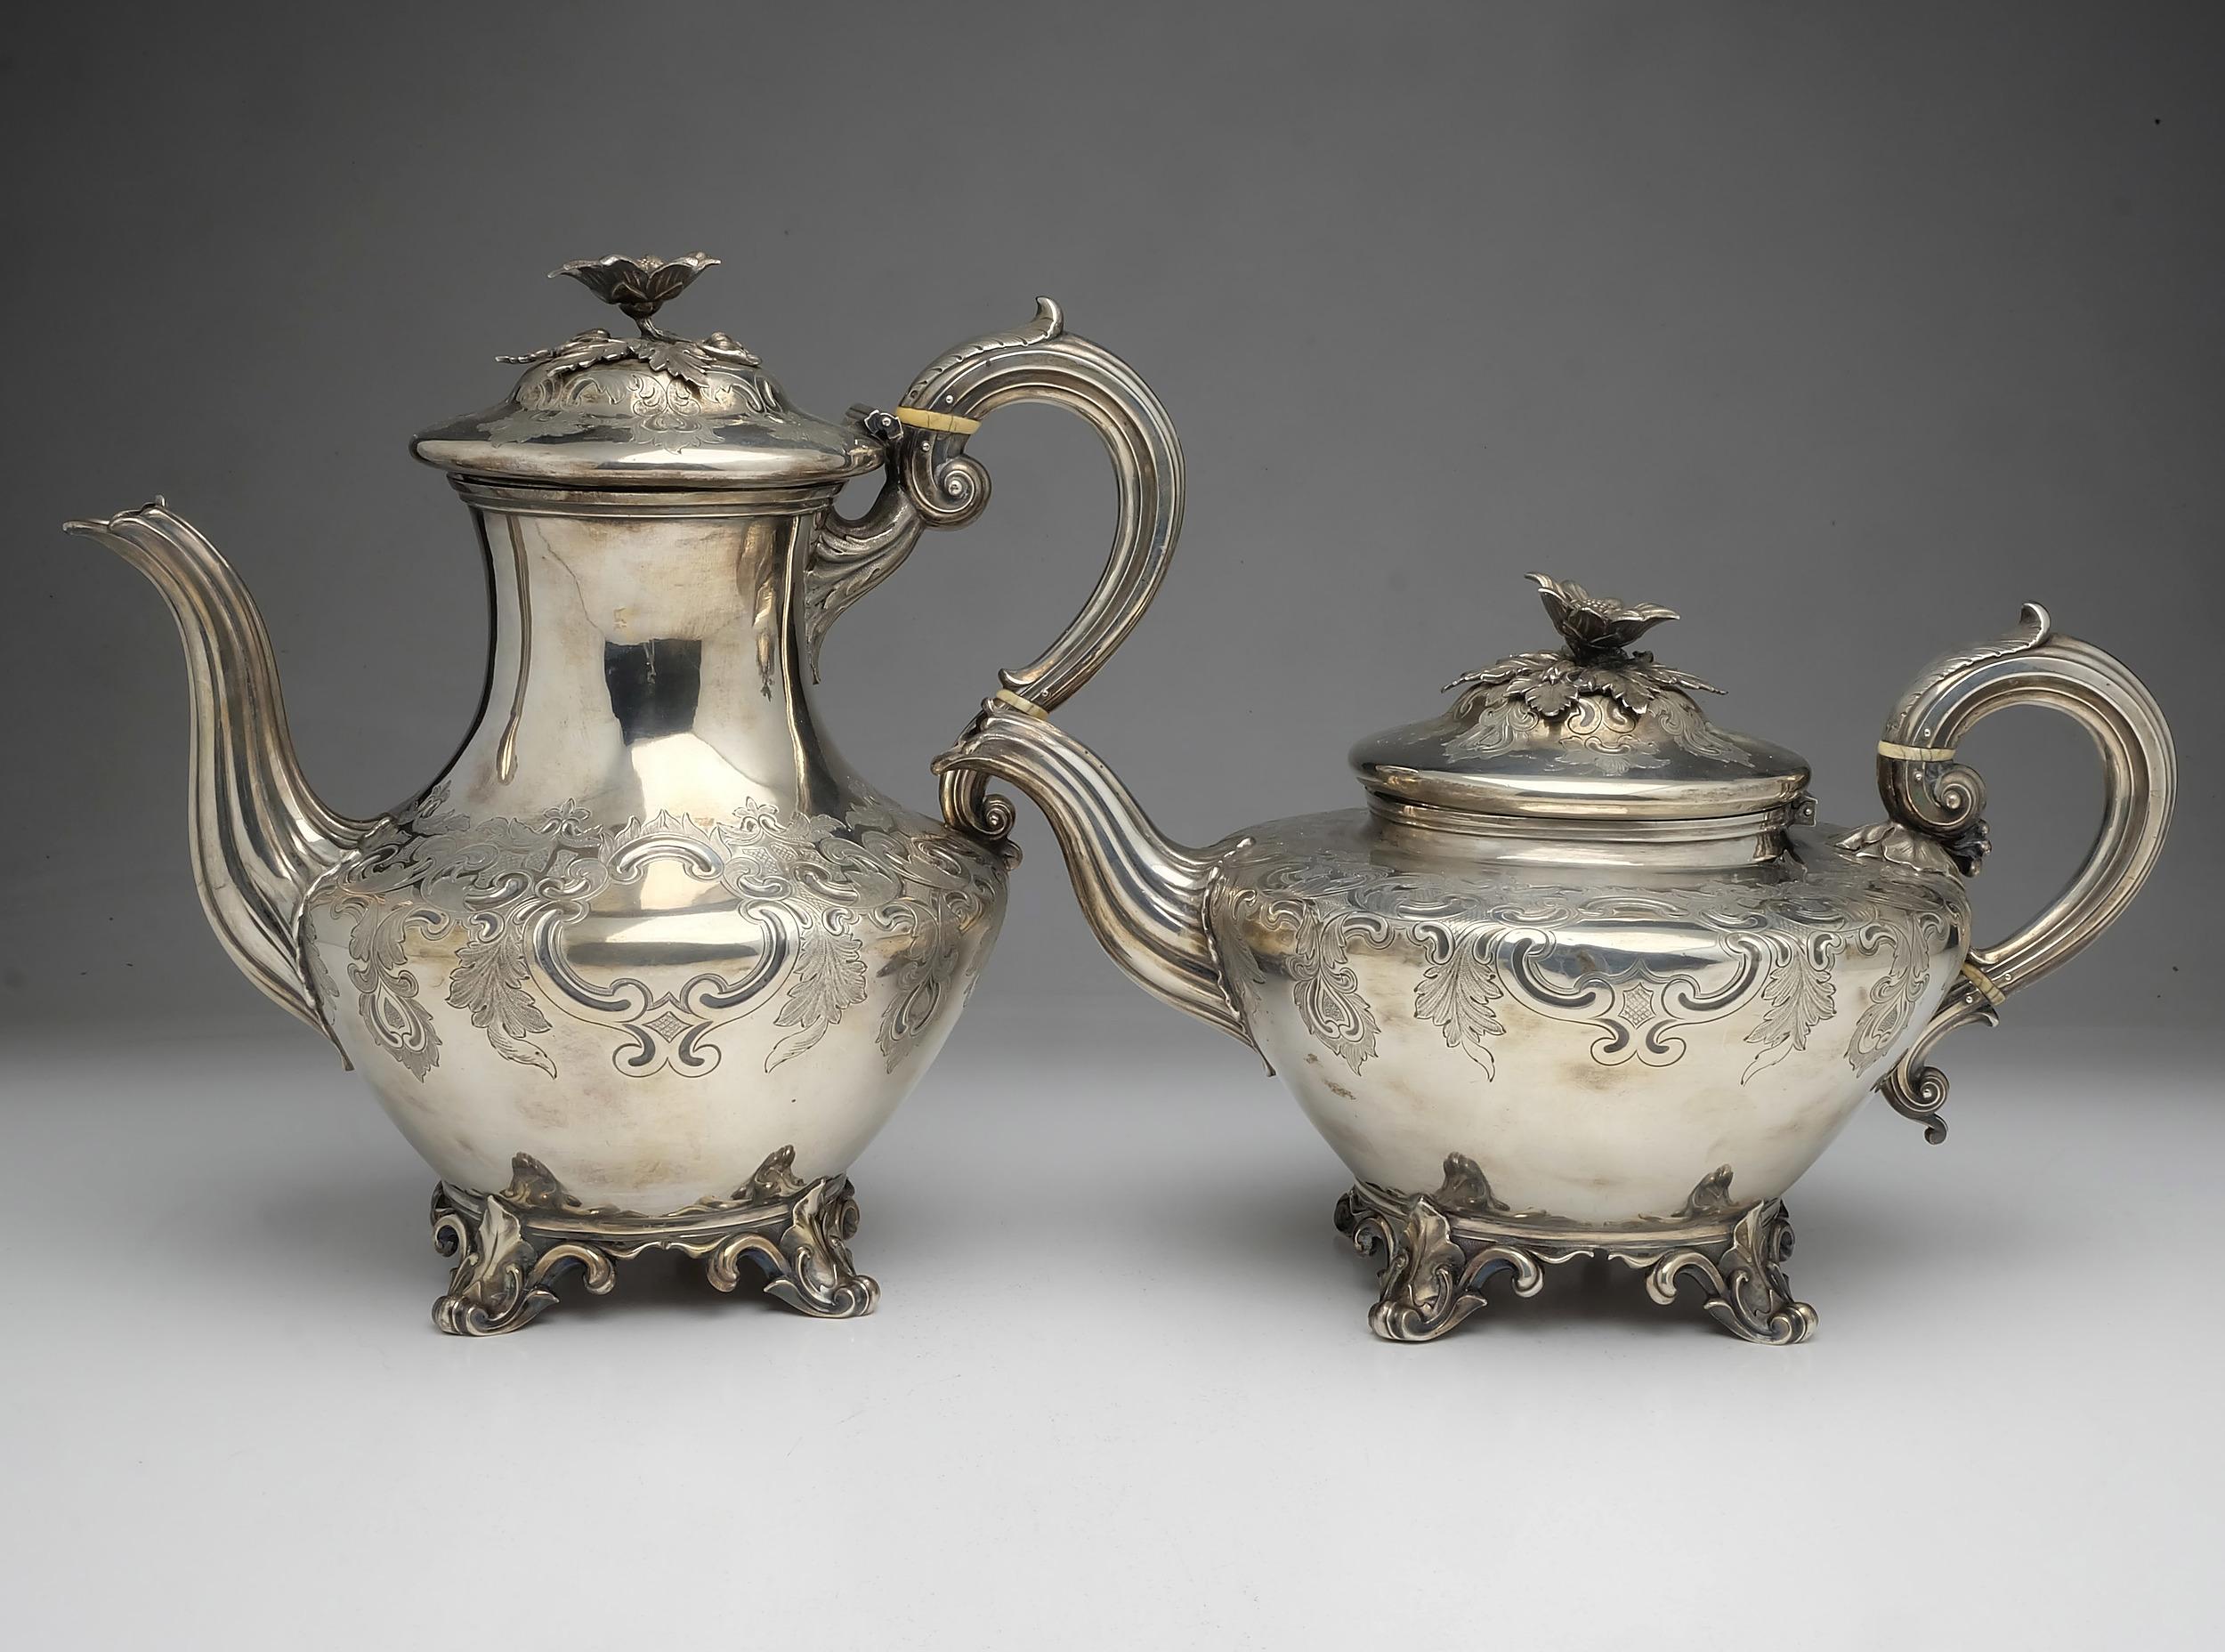 'Matched Engraved Sterling Silver Tea and Coffee Pots London, Edward, Edward Junior, John & William Barnard 1836 1651g'